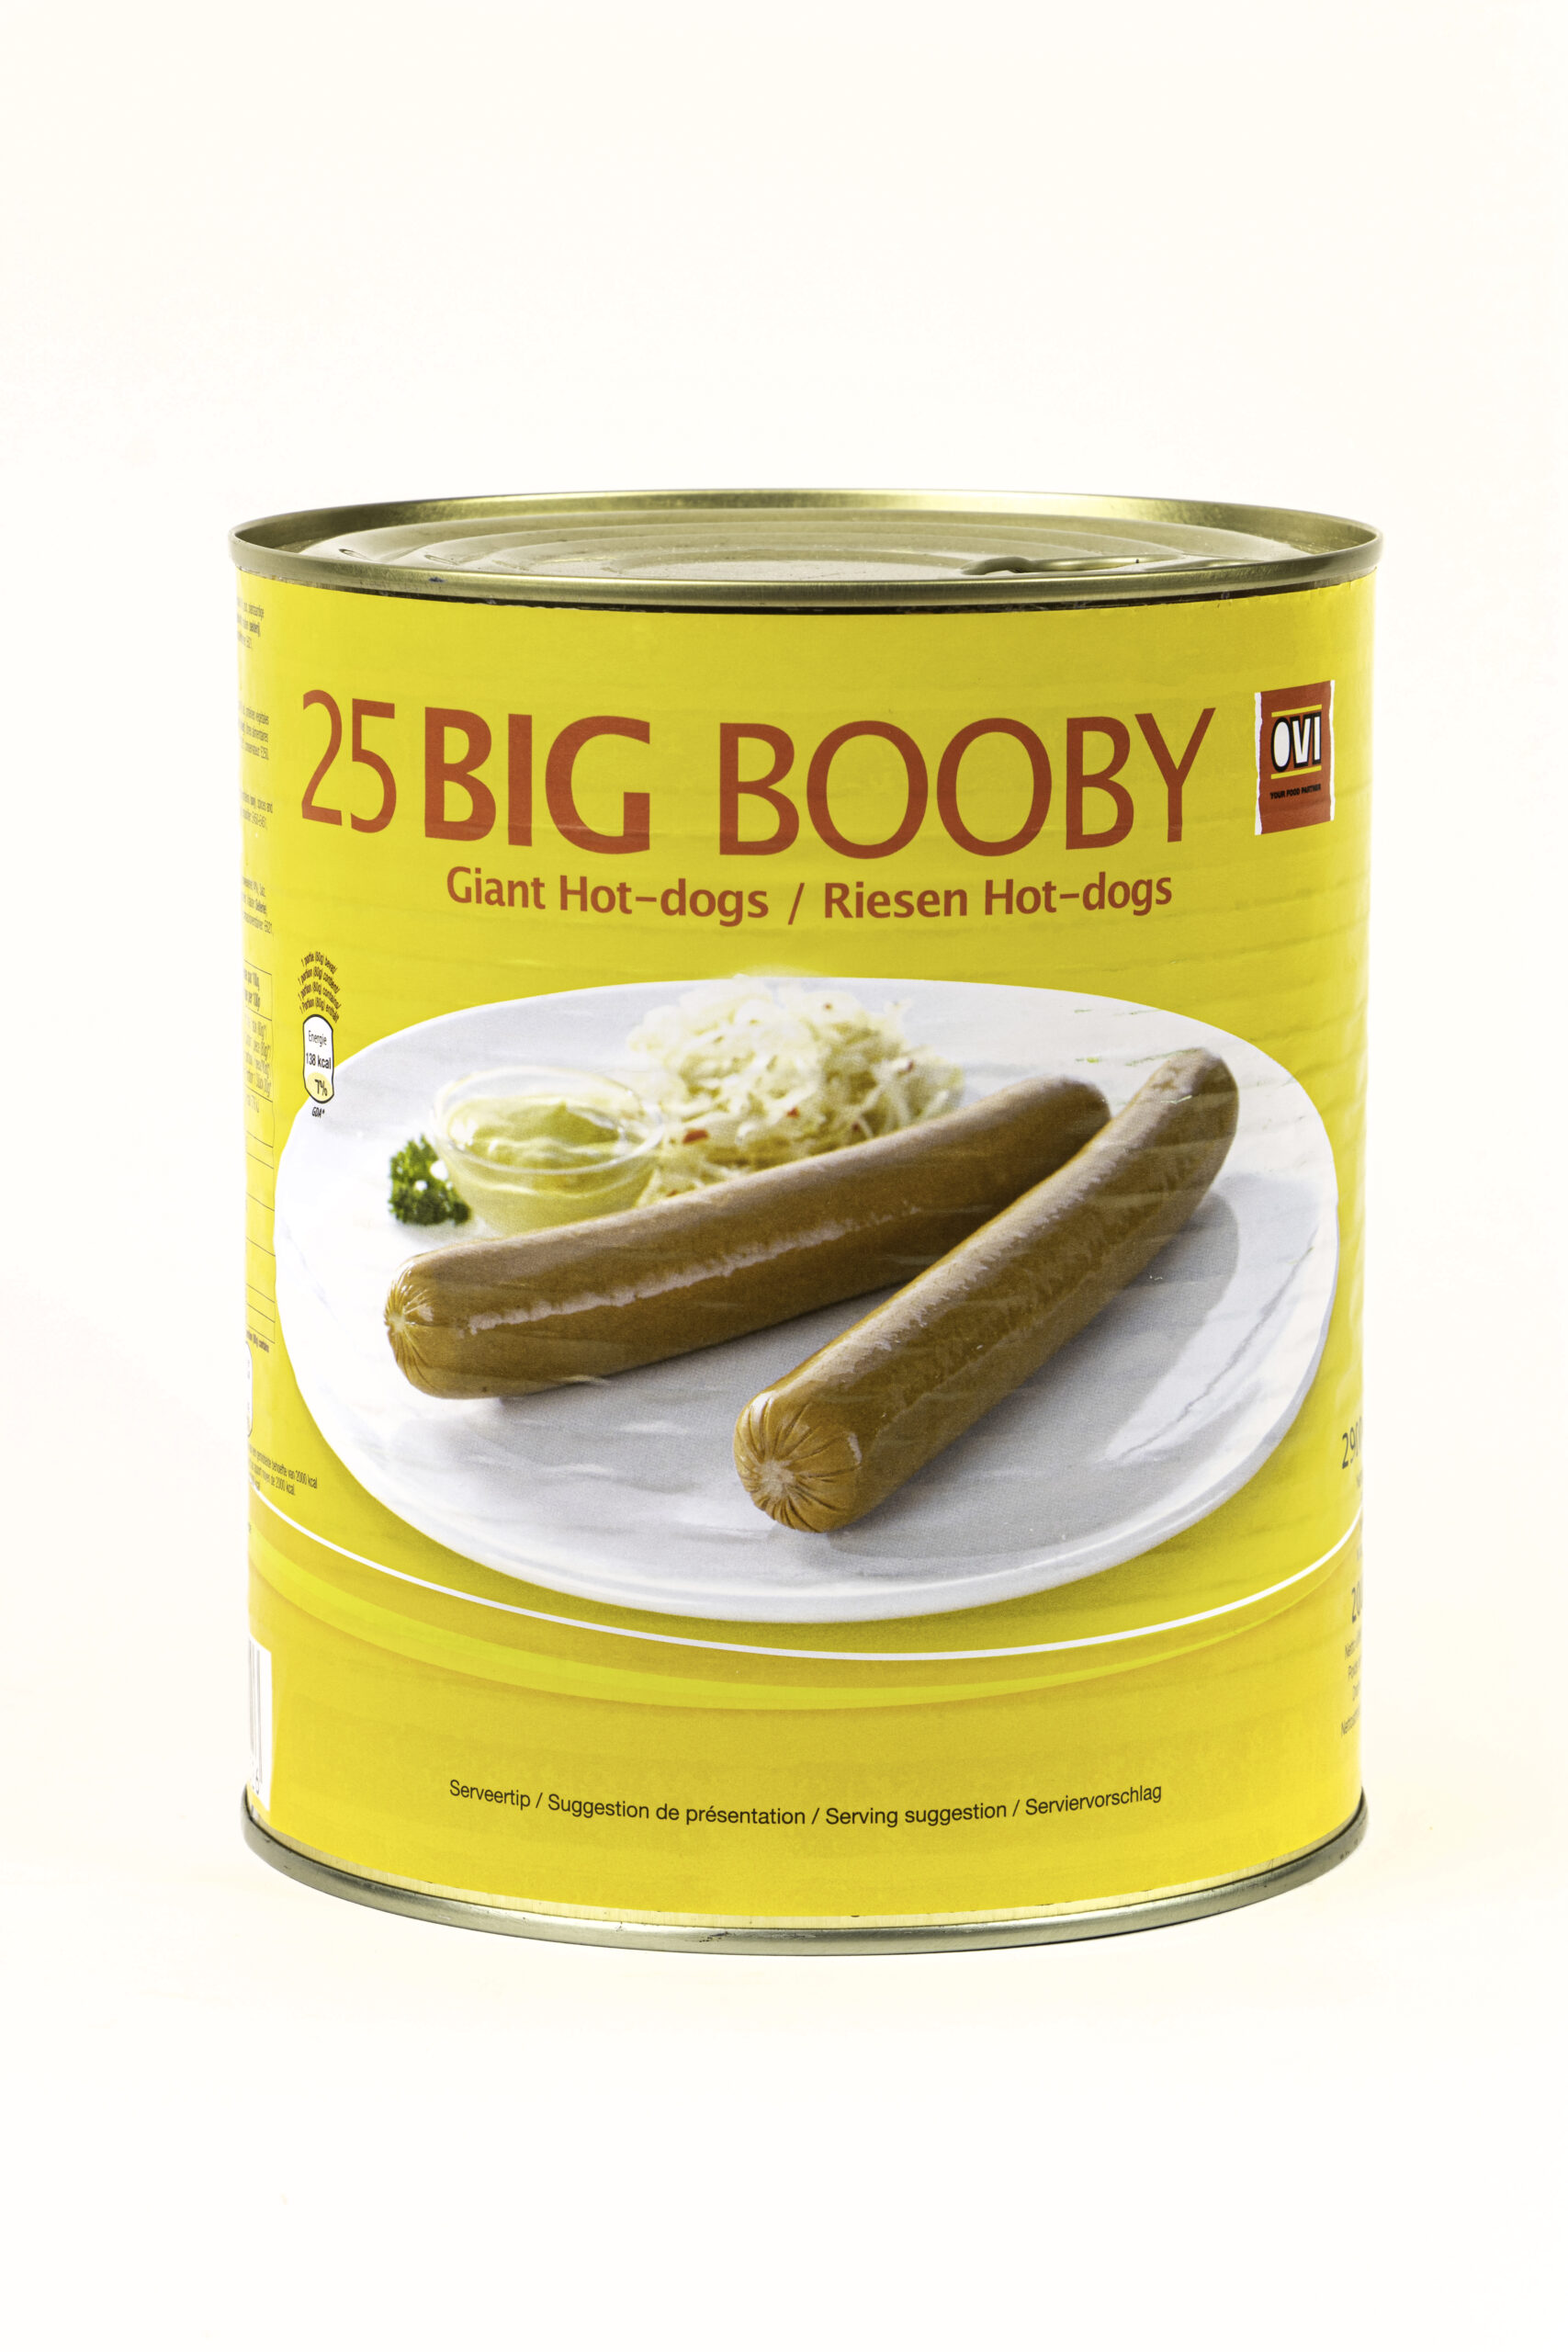 Hotdog Big Booby 25 x 80 g OVI